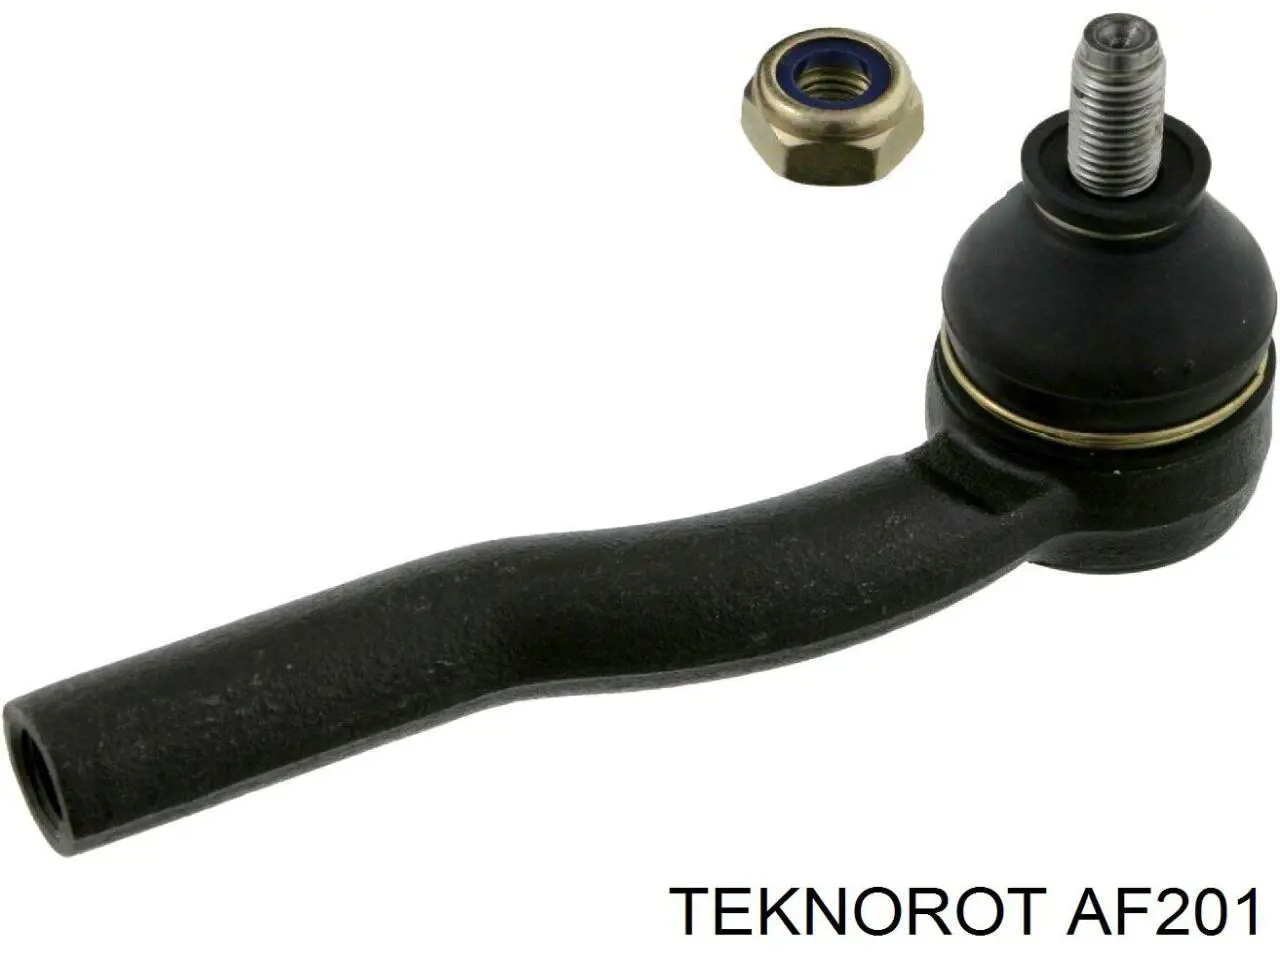 AF201 Teknorot rótula barra de acoplamiento exterior